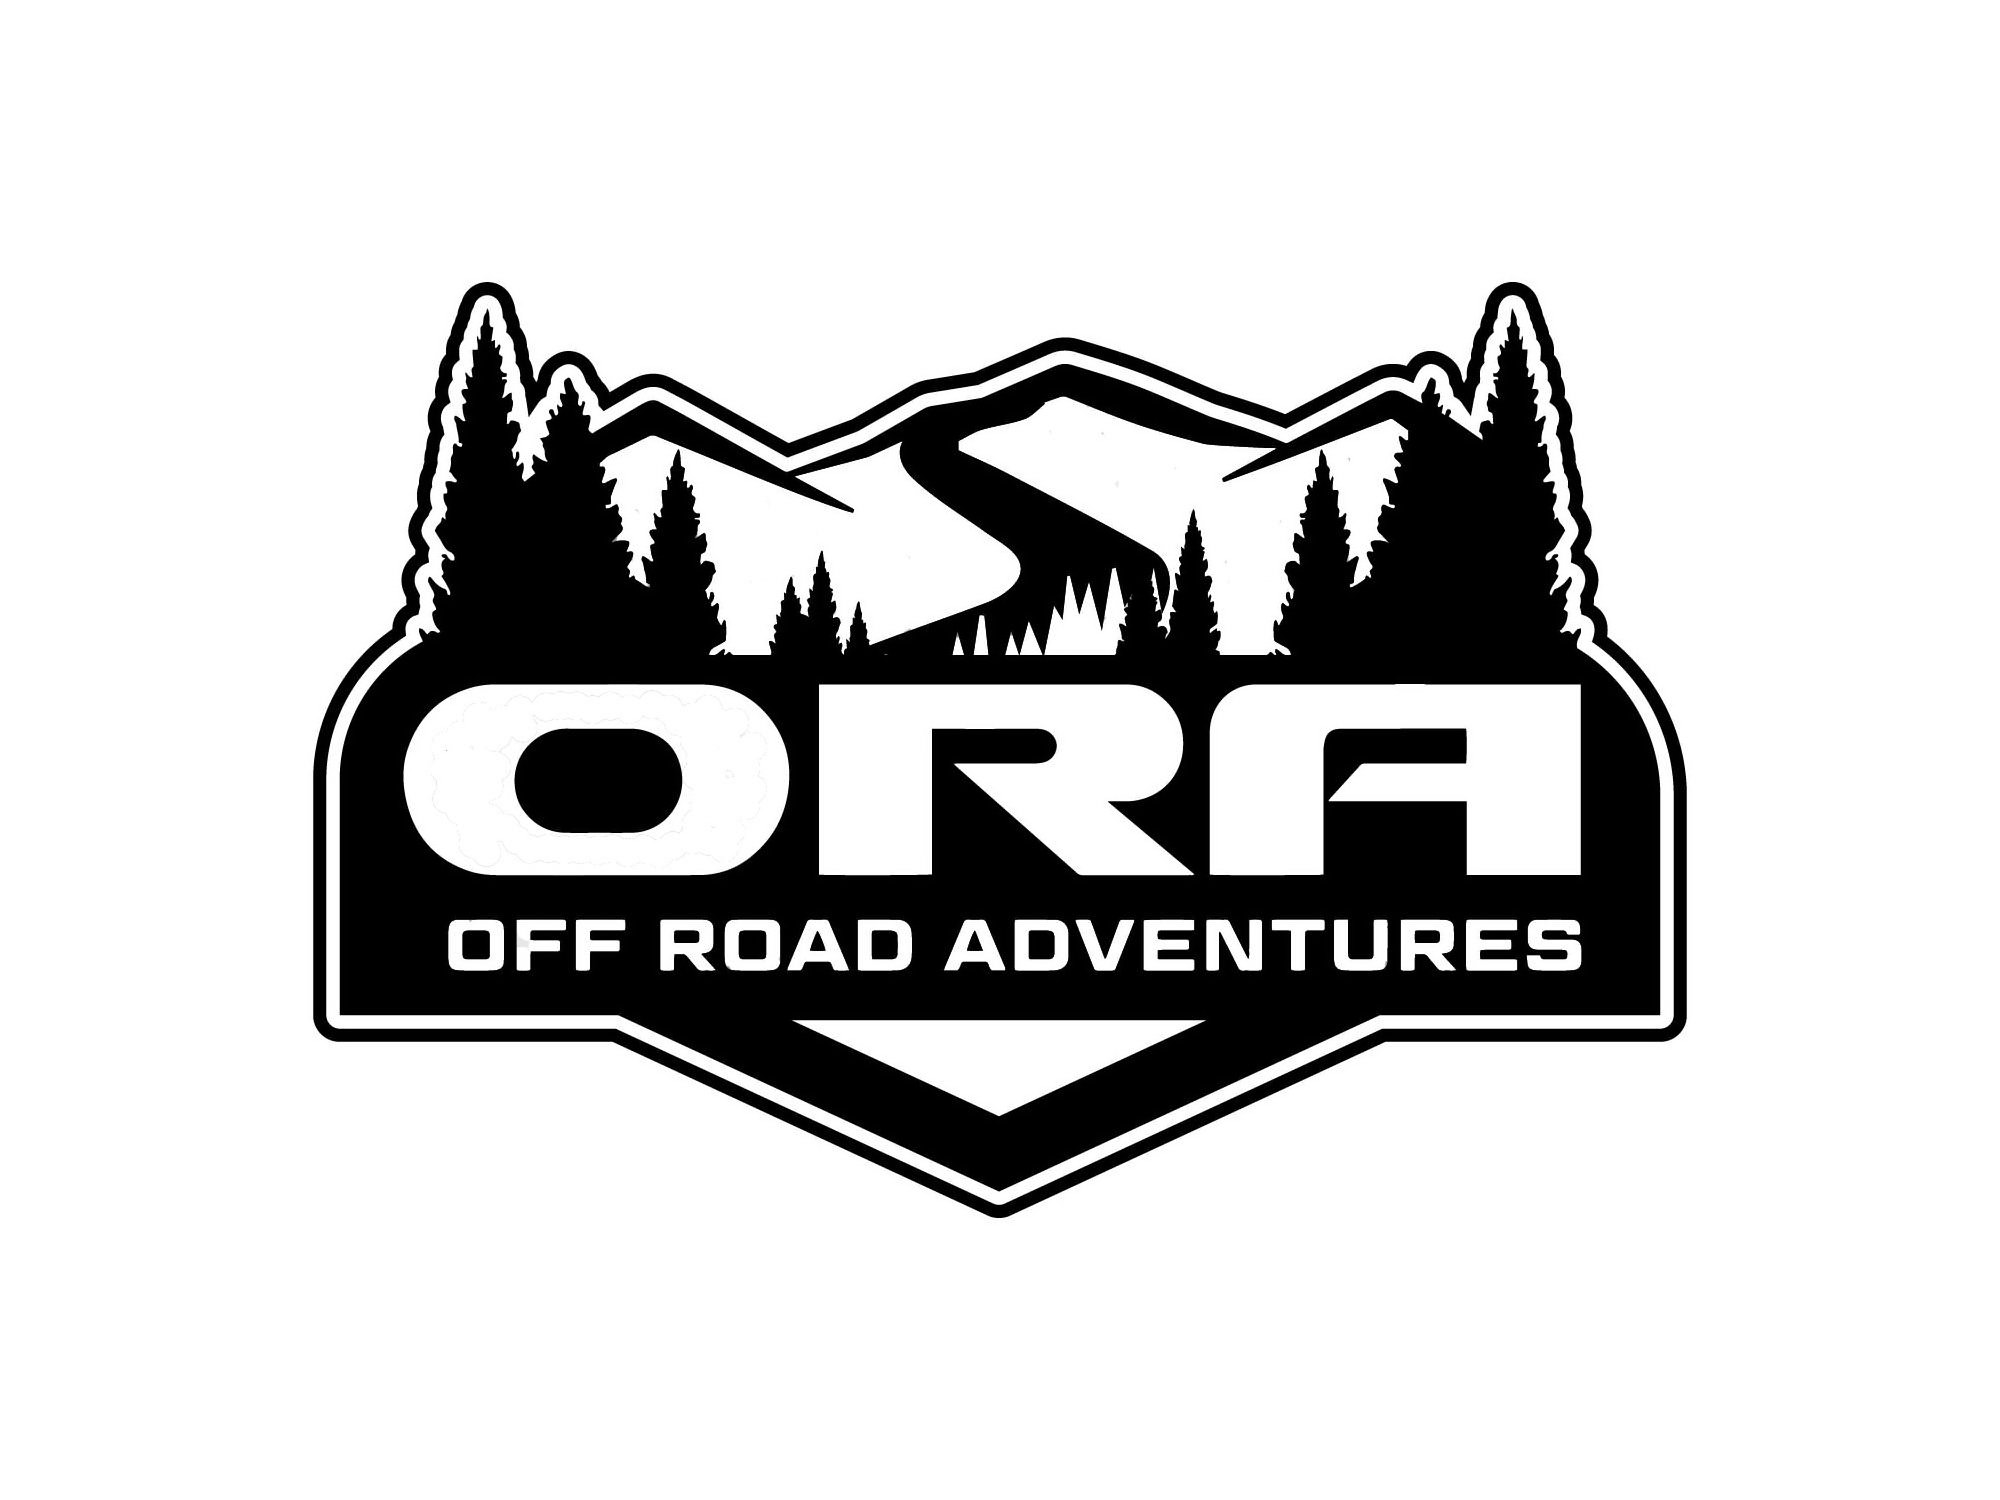 ORA OFFROAD ADVENTURES - Miller, Michael Trademark Registration